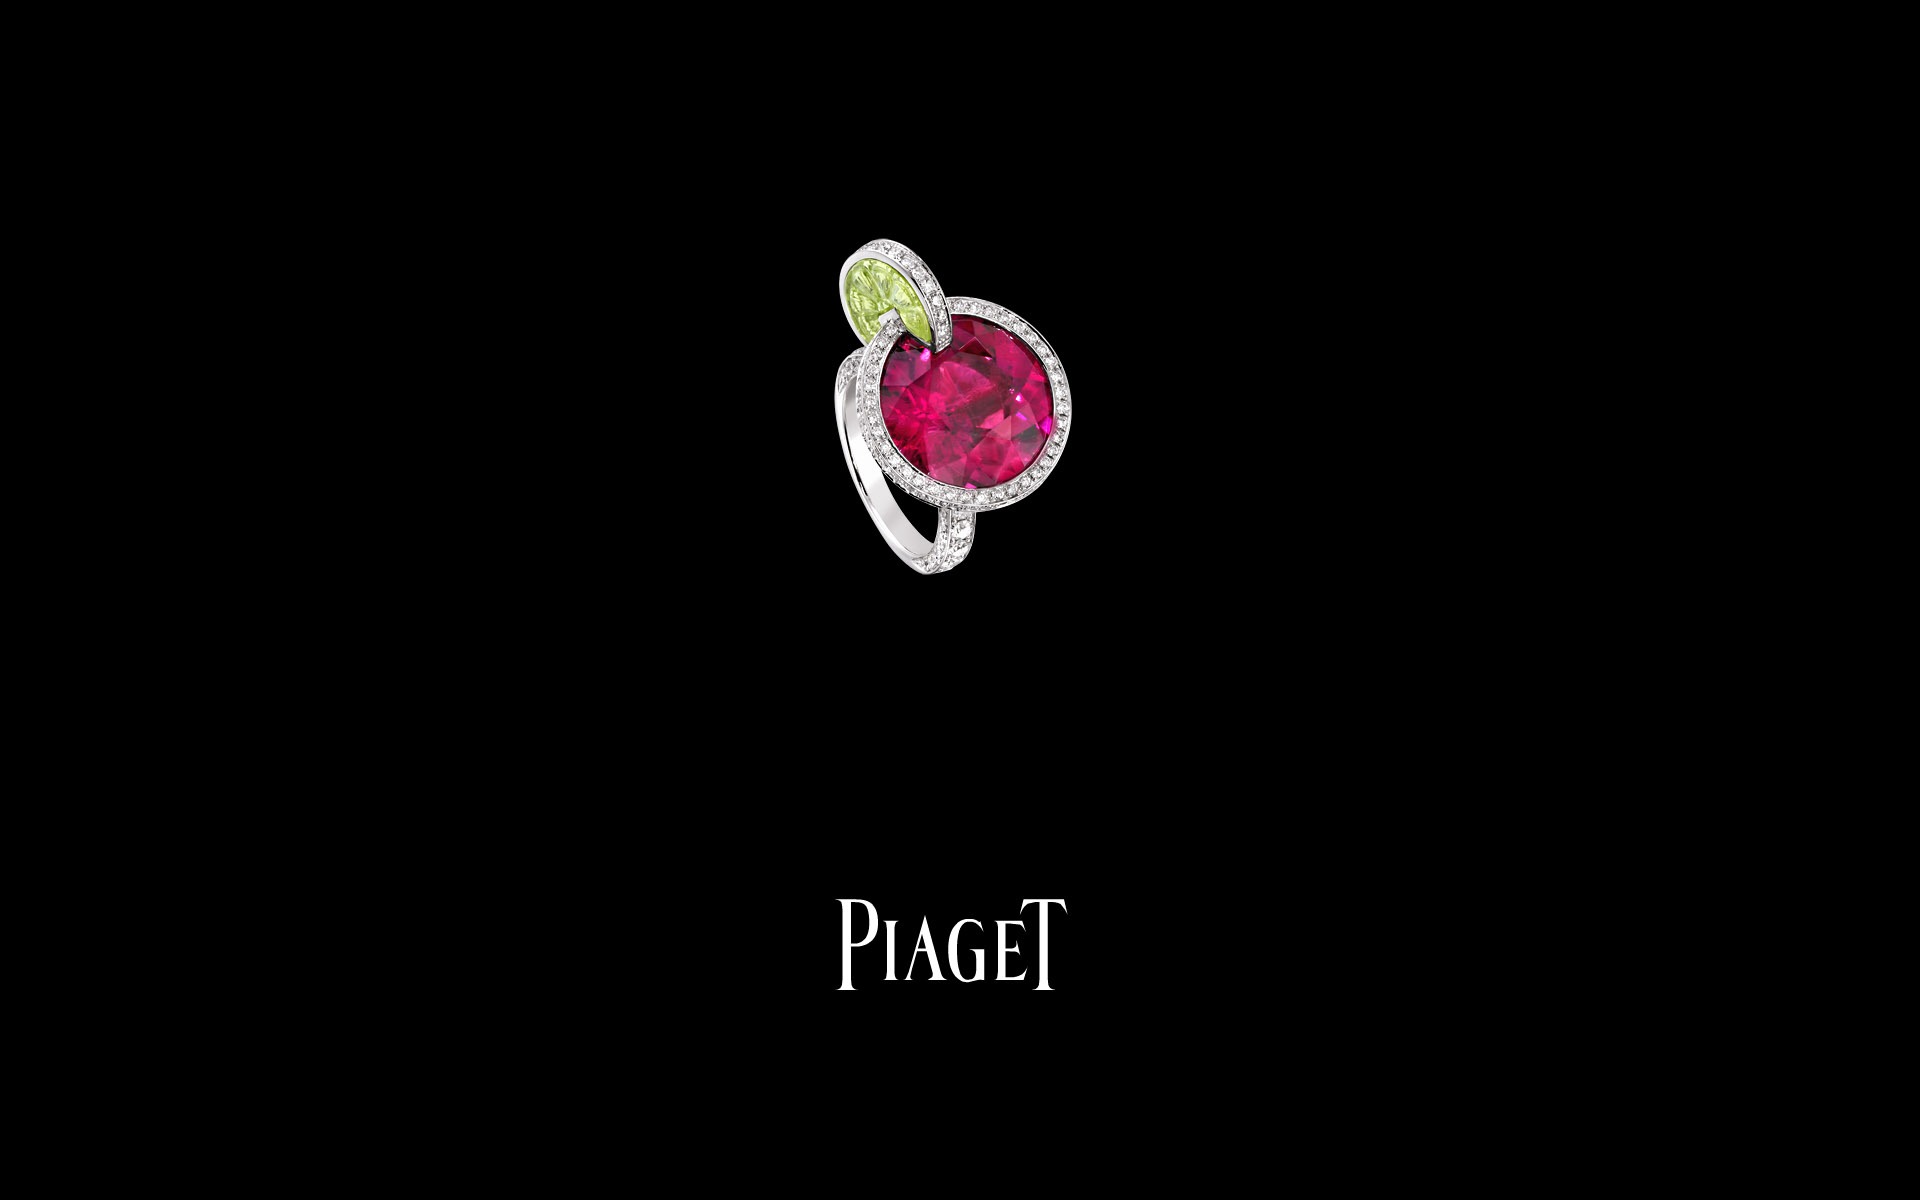 Piaget diamond jewelry wallpaper (4) #20 - 1920x1200